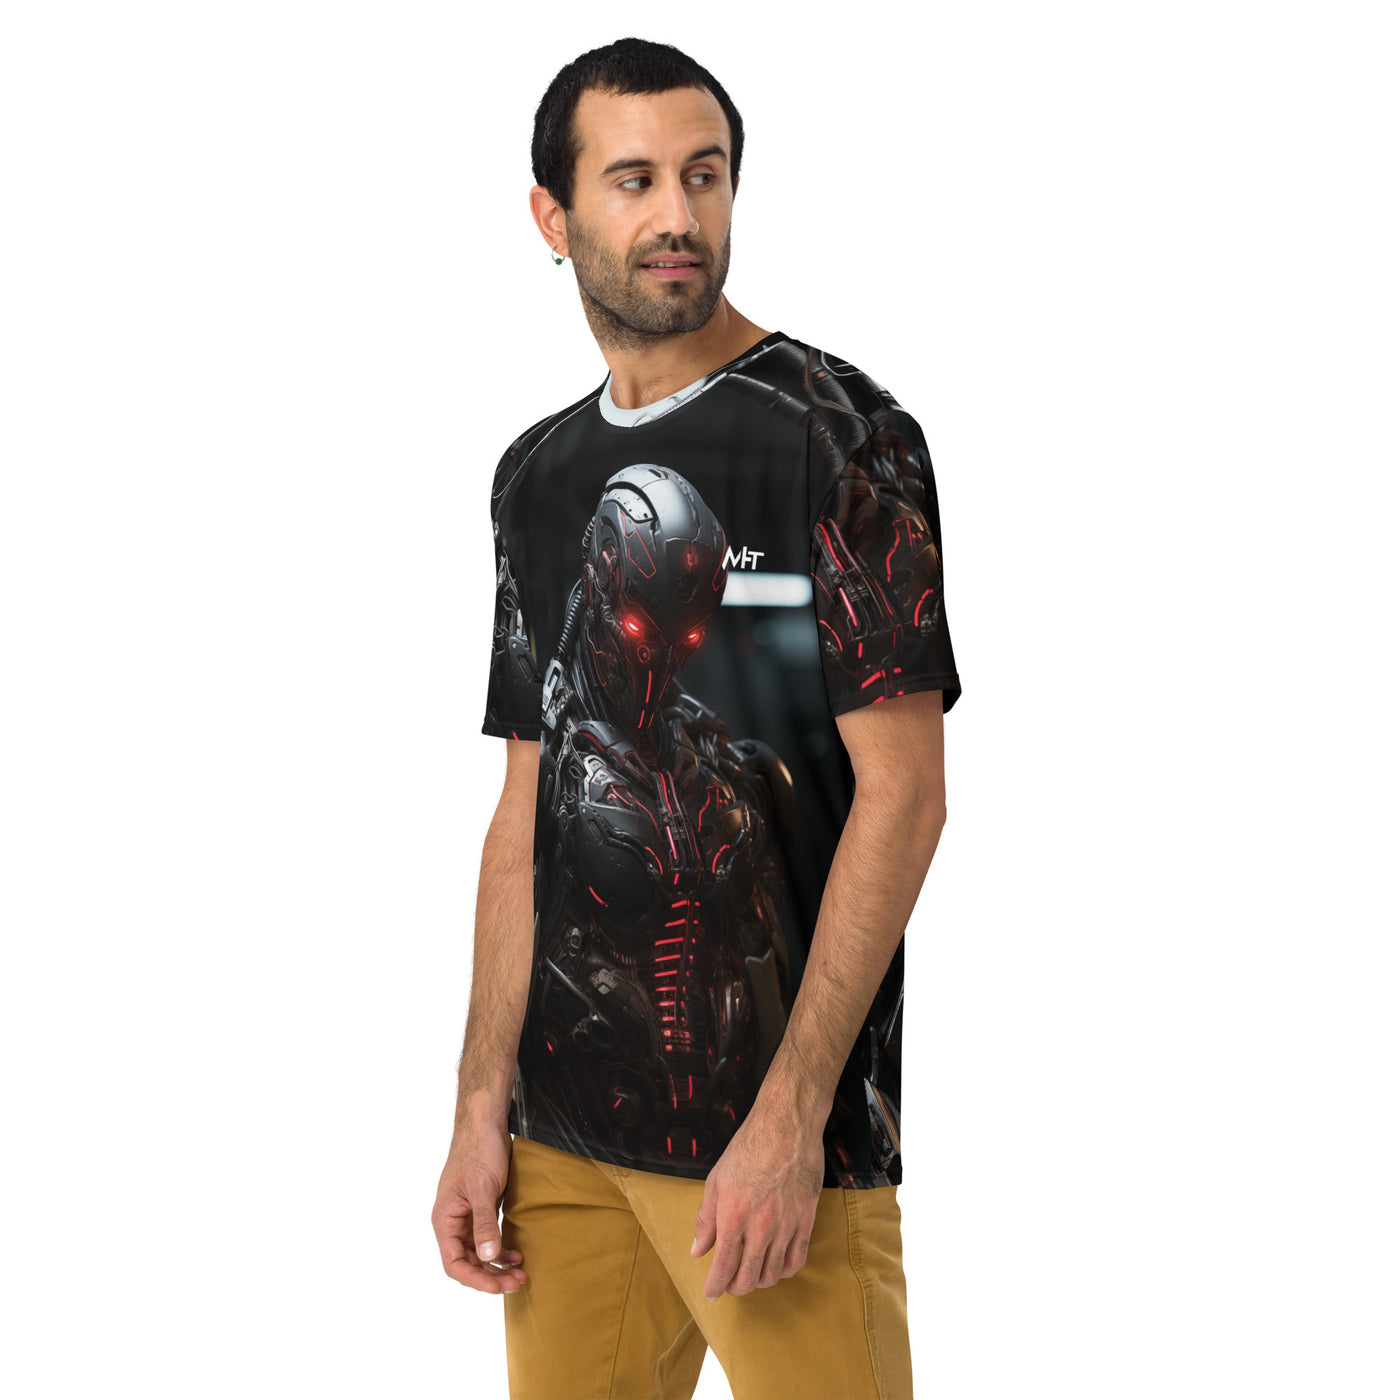 CyberArms Warrior v39 - Men's t-shirt